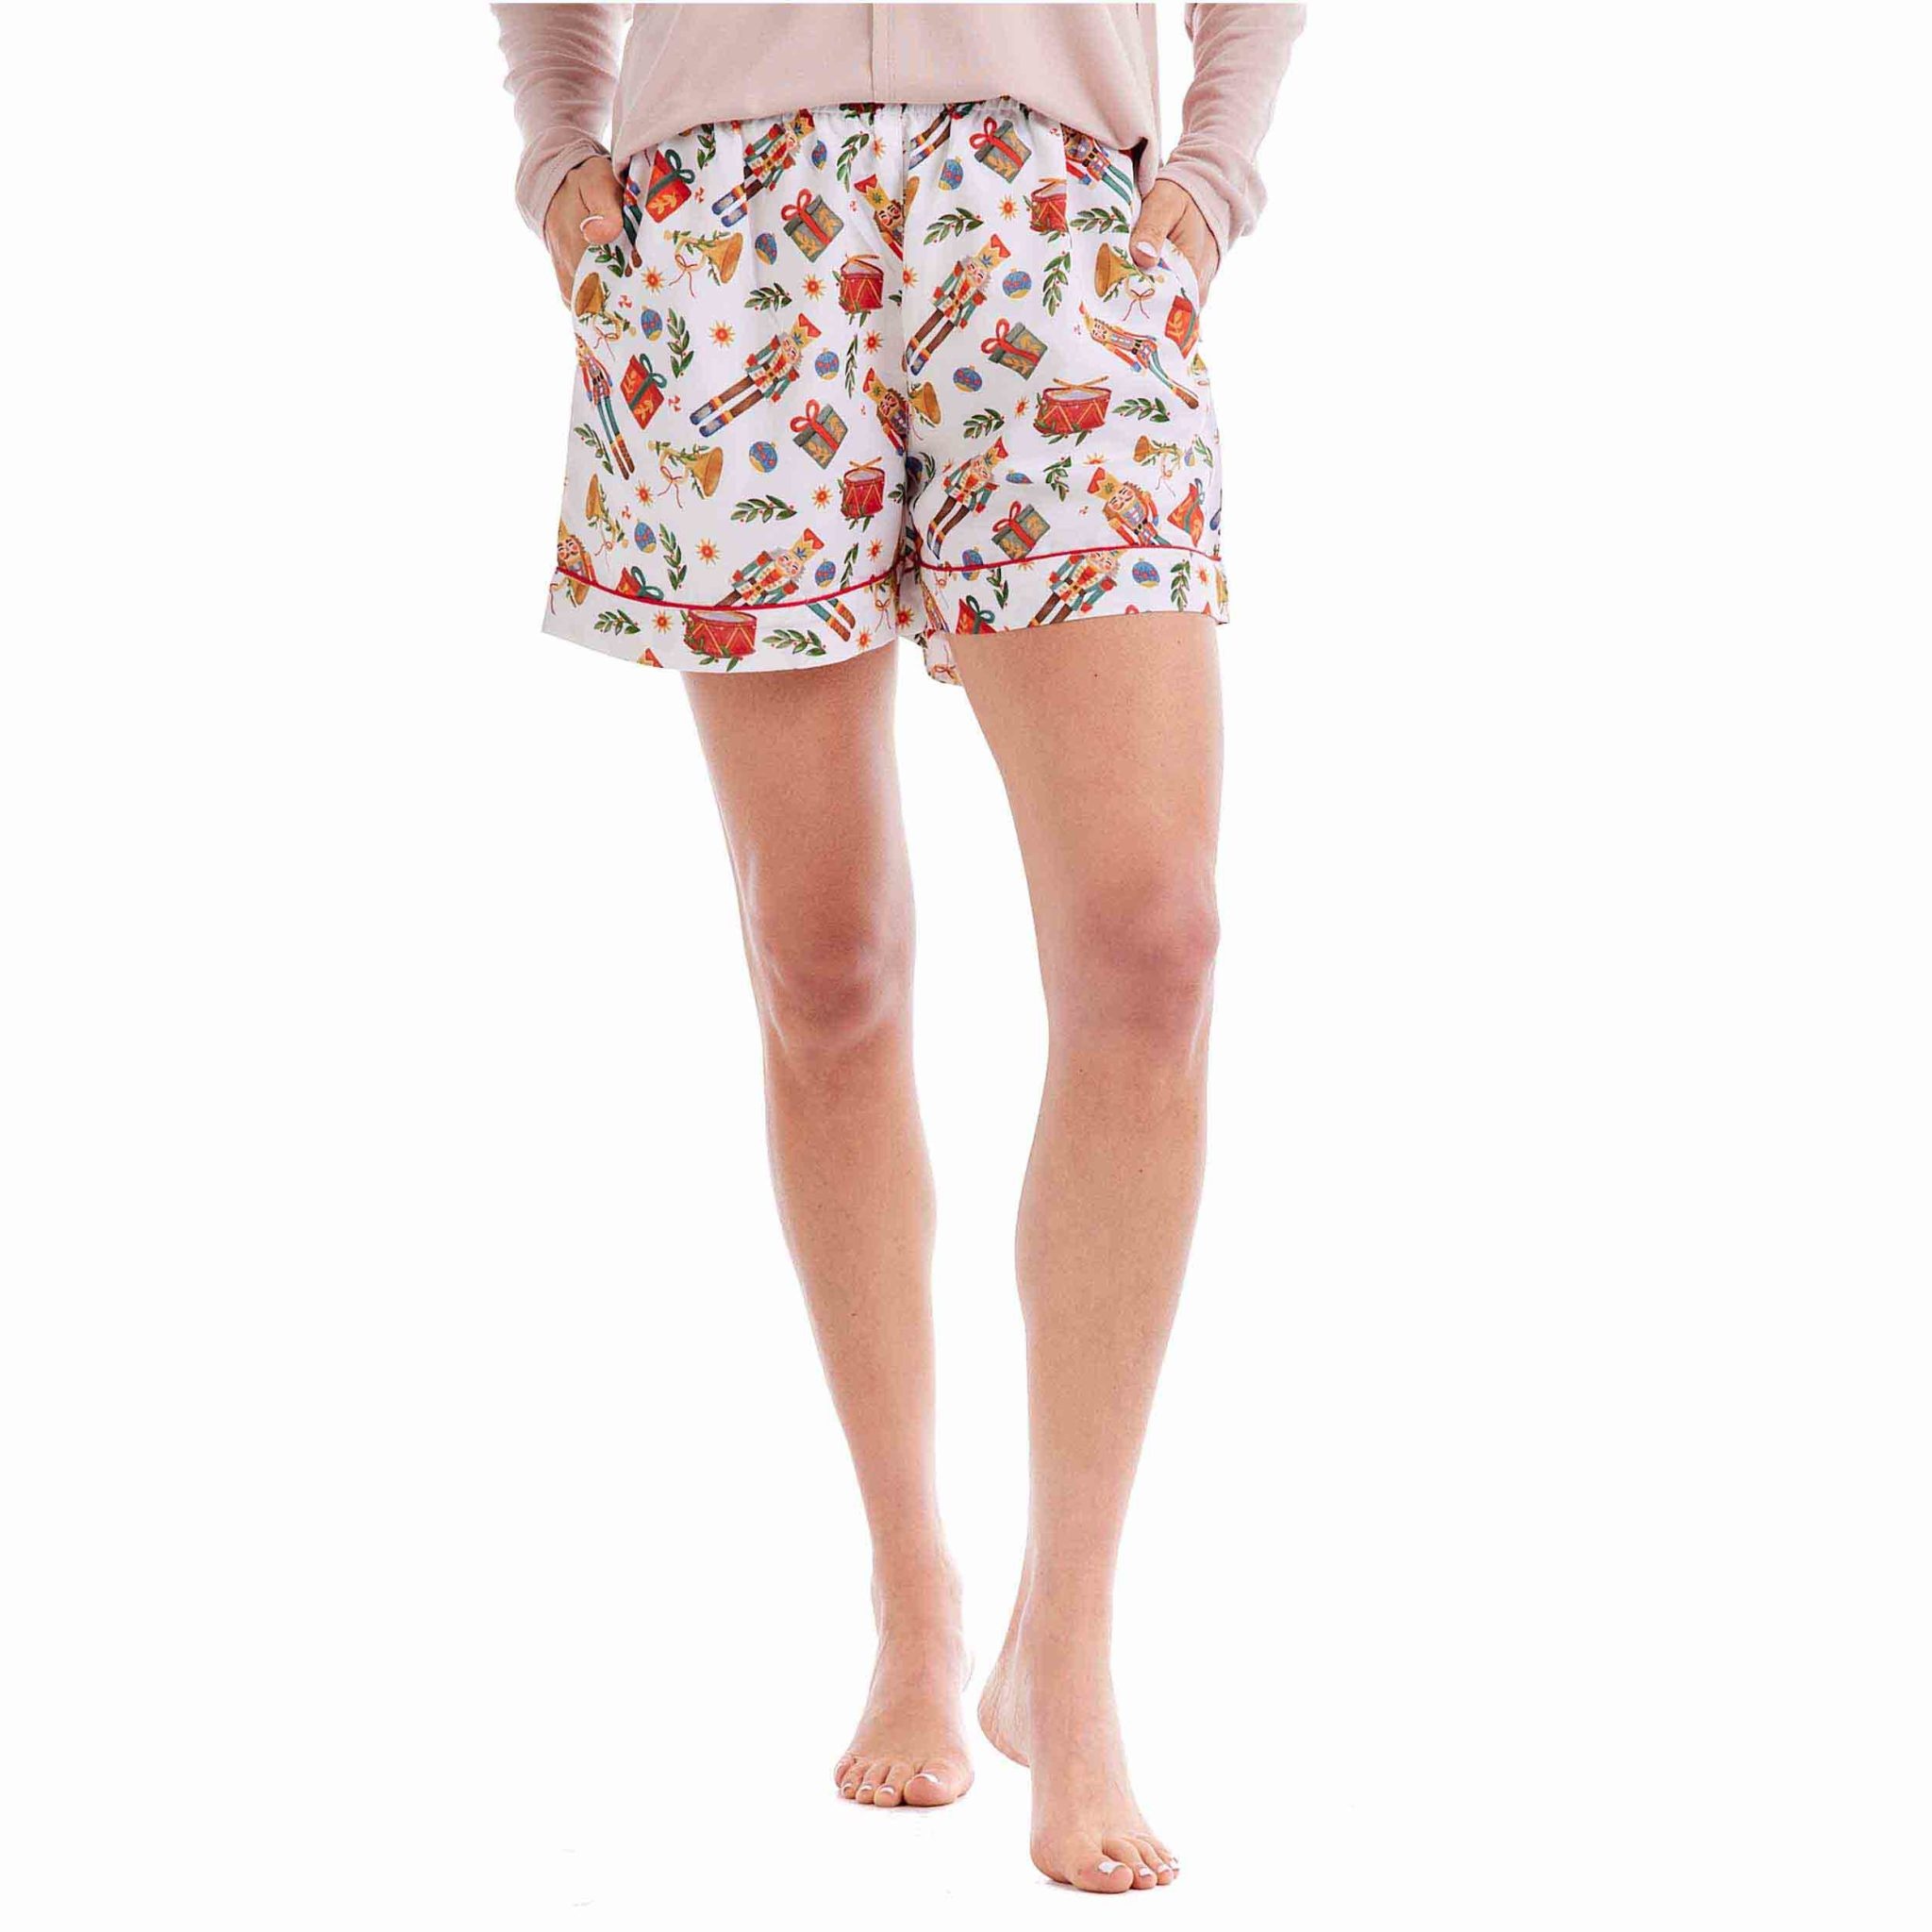 Mudpie Nutcracker Pajama Short (Size Medium)